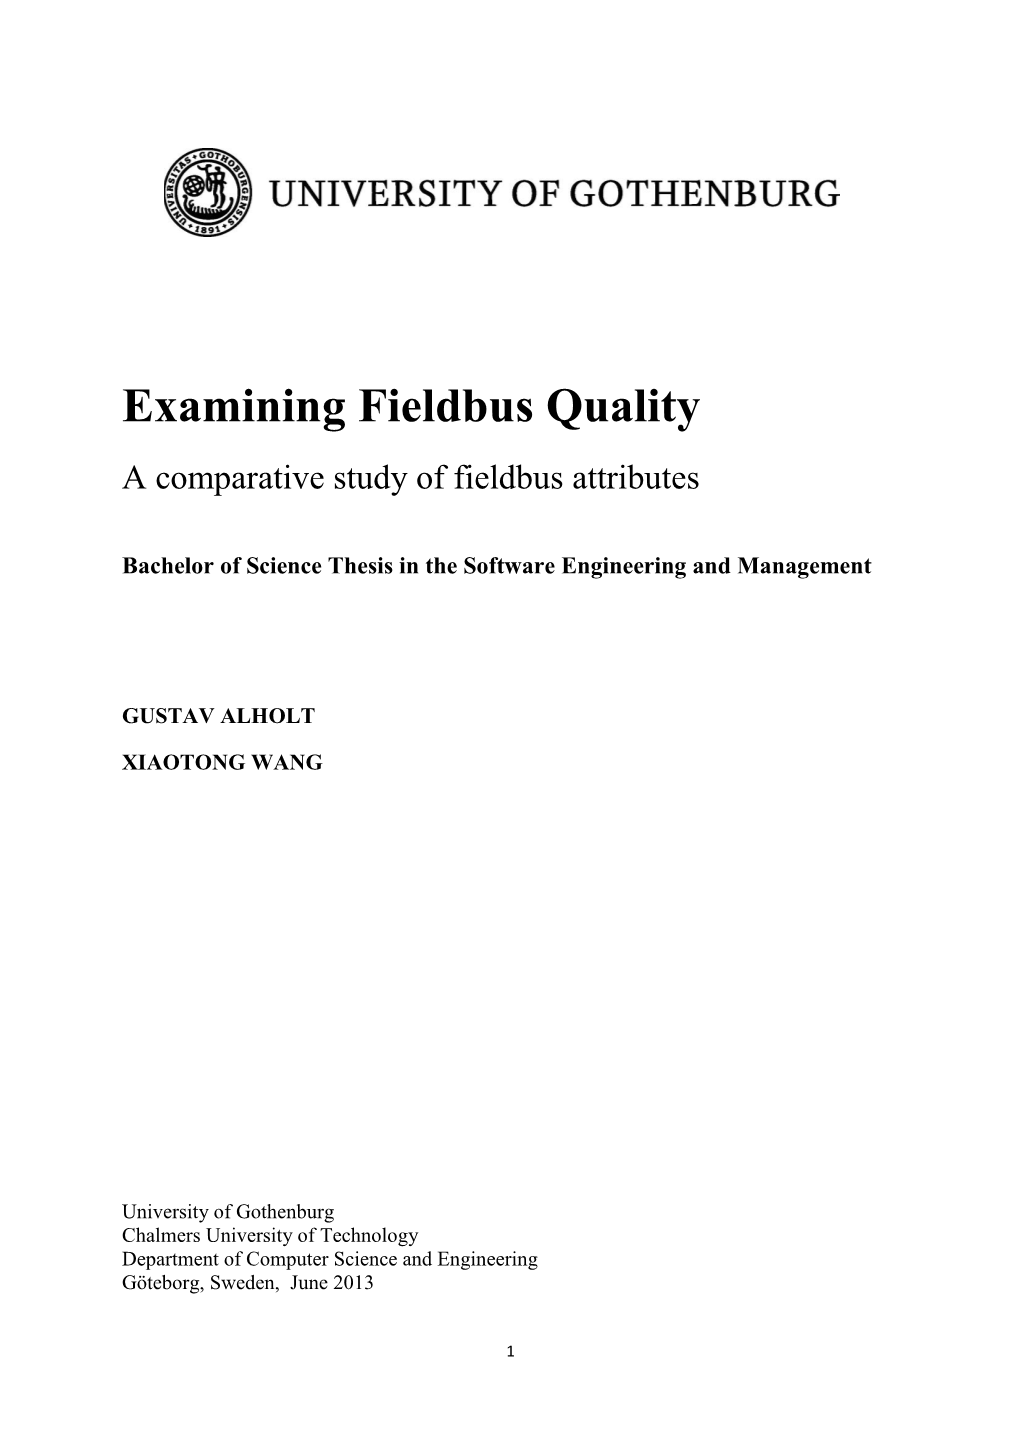 Examining Fieldbus Quality a Comparative Study of Fieldbus Attributes